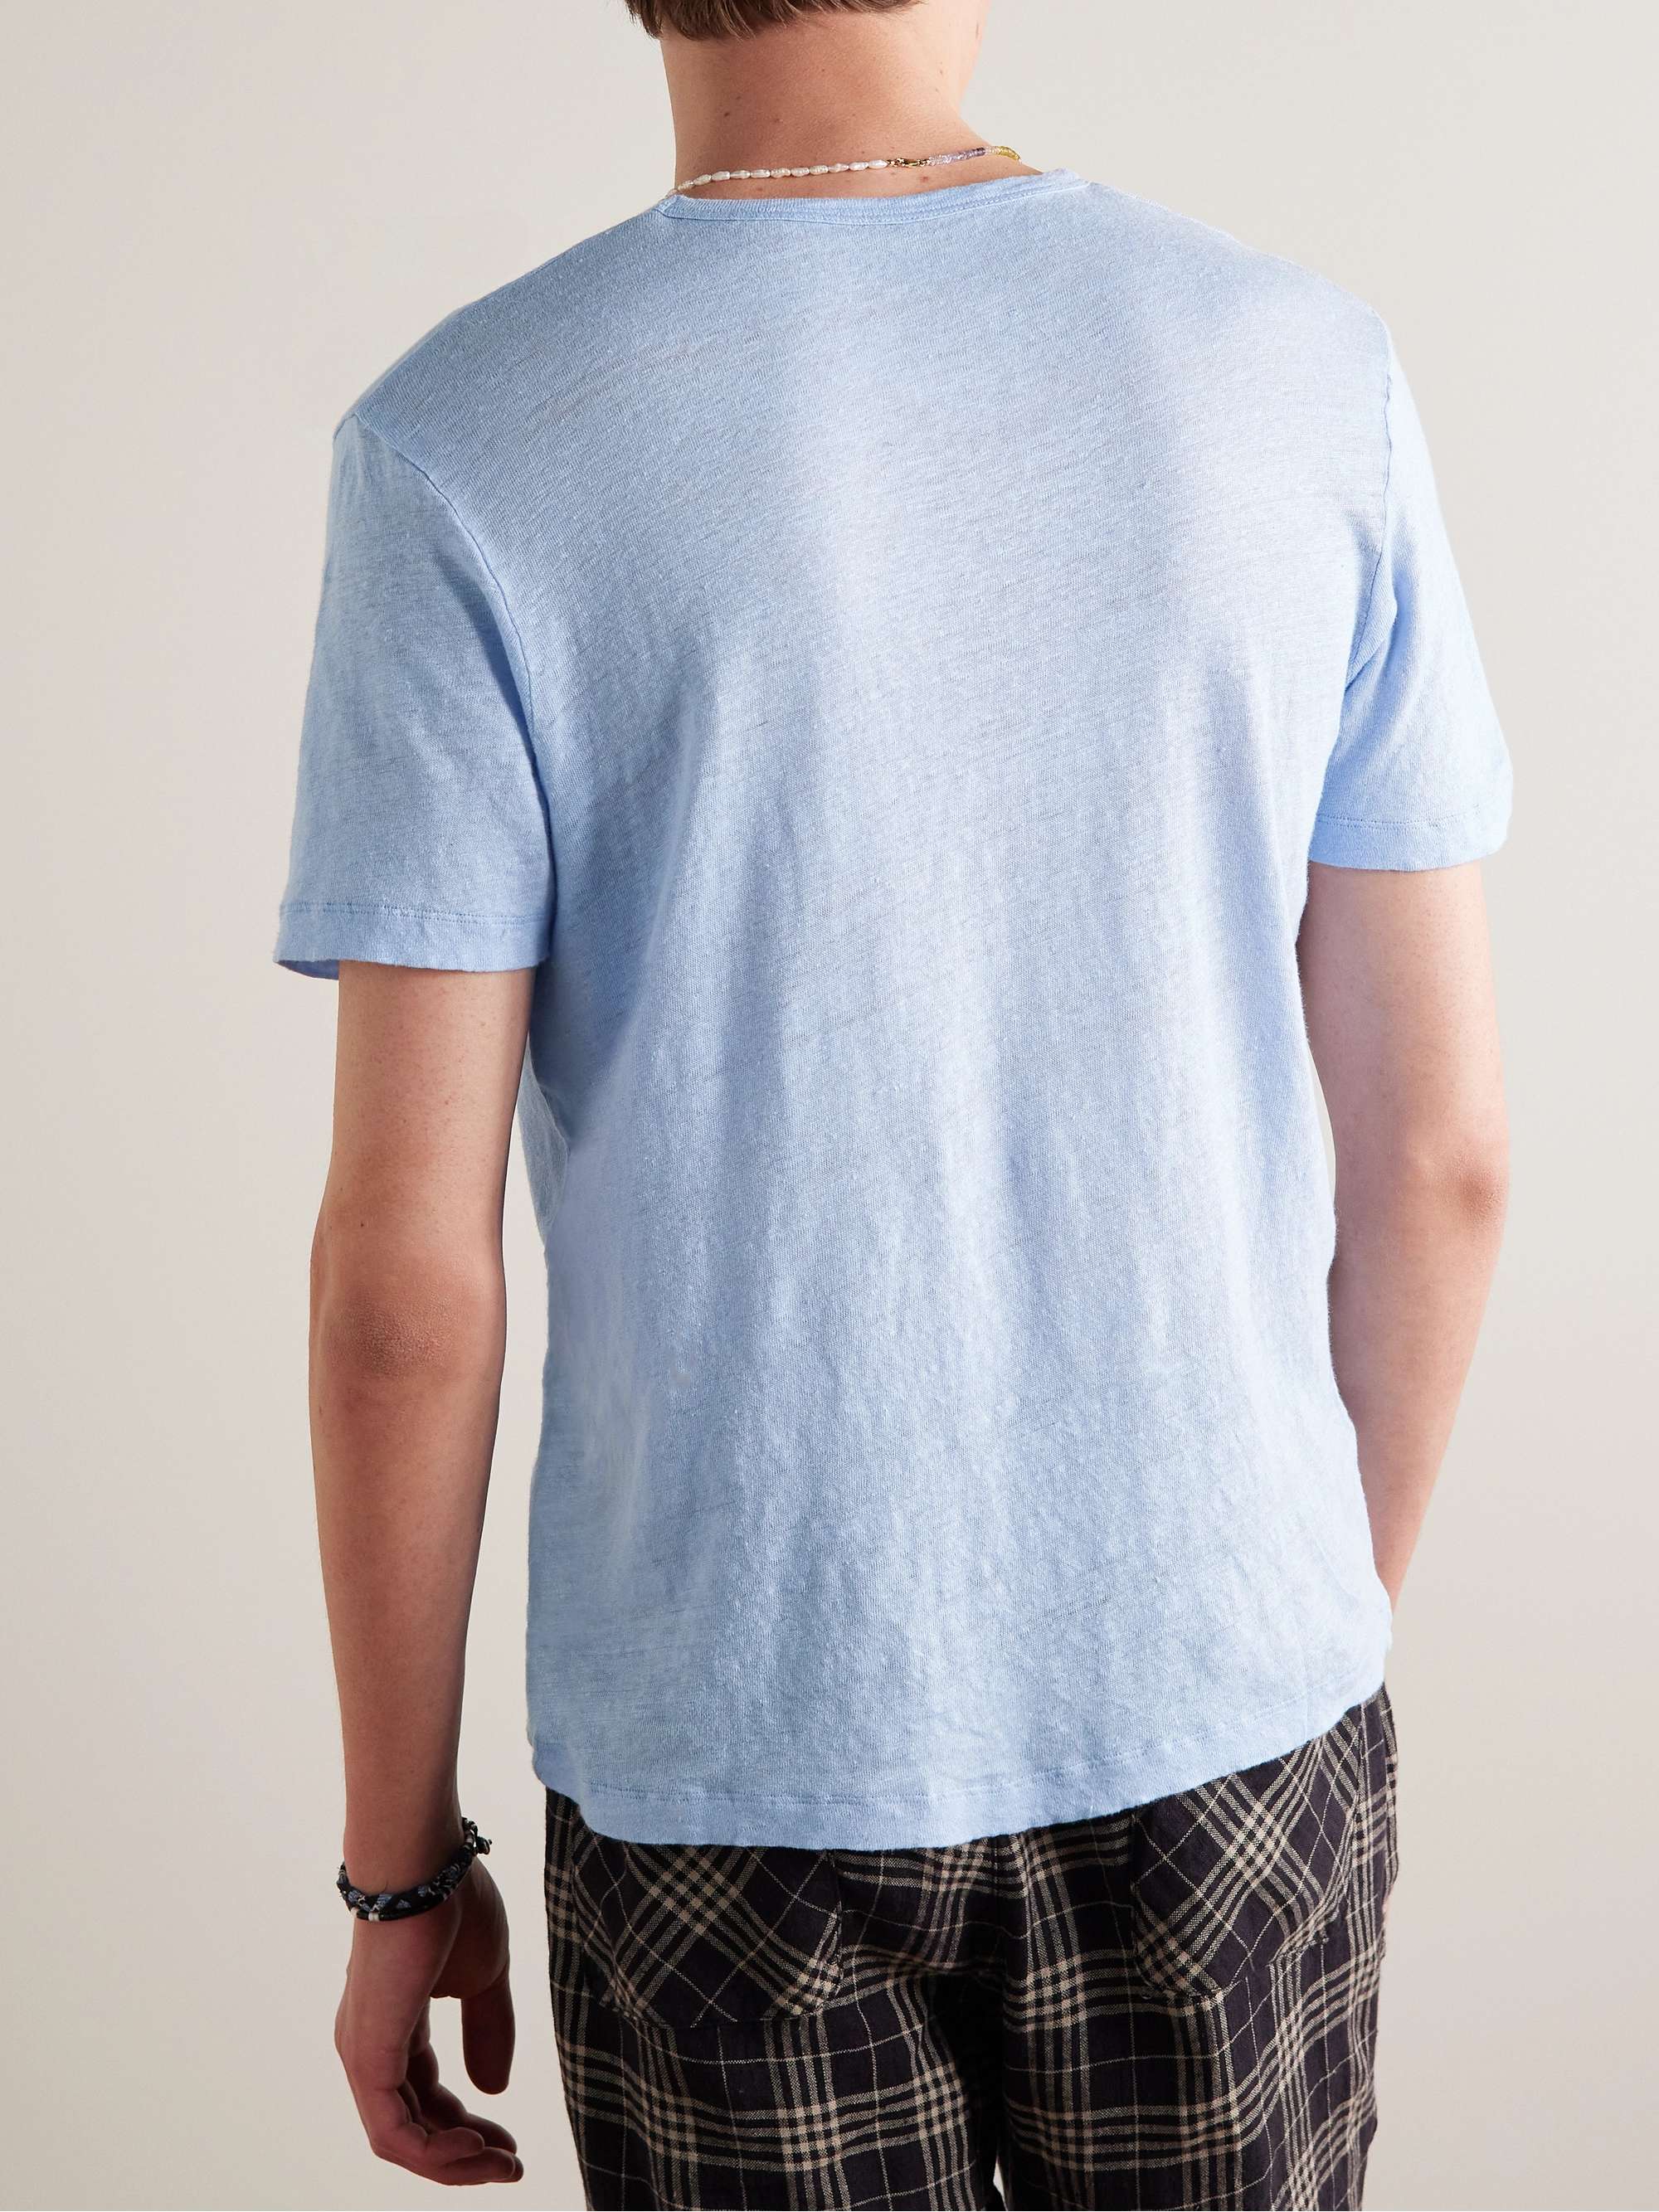 HARTFORD Linen T-Shirt